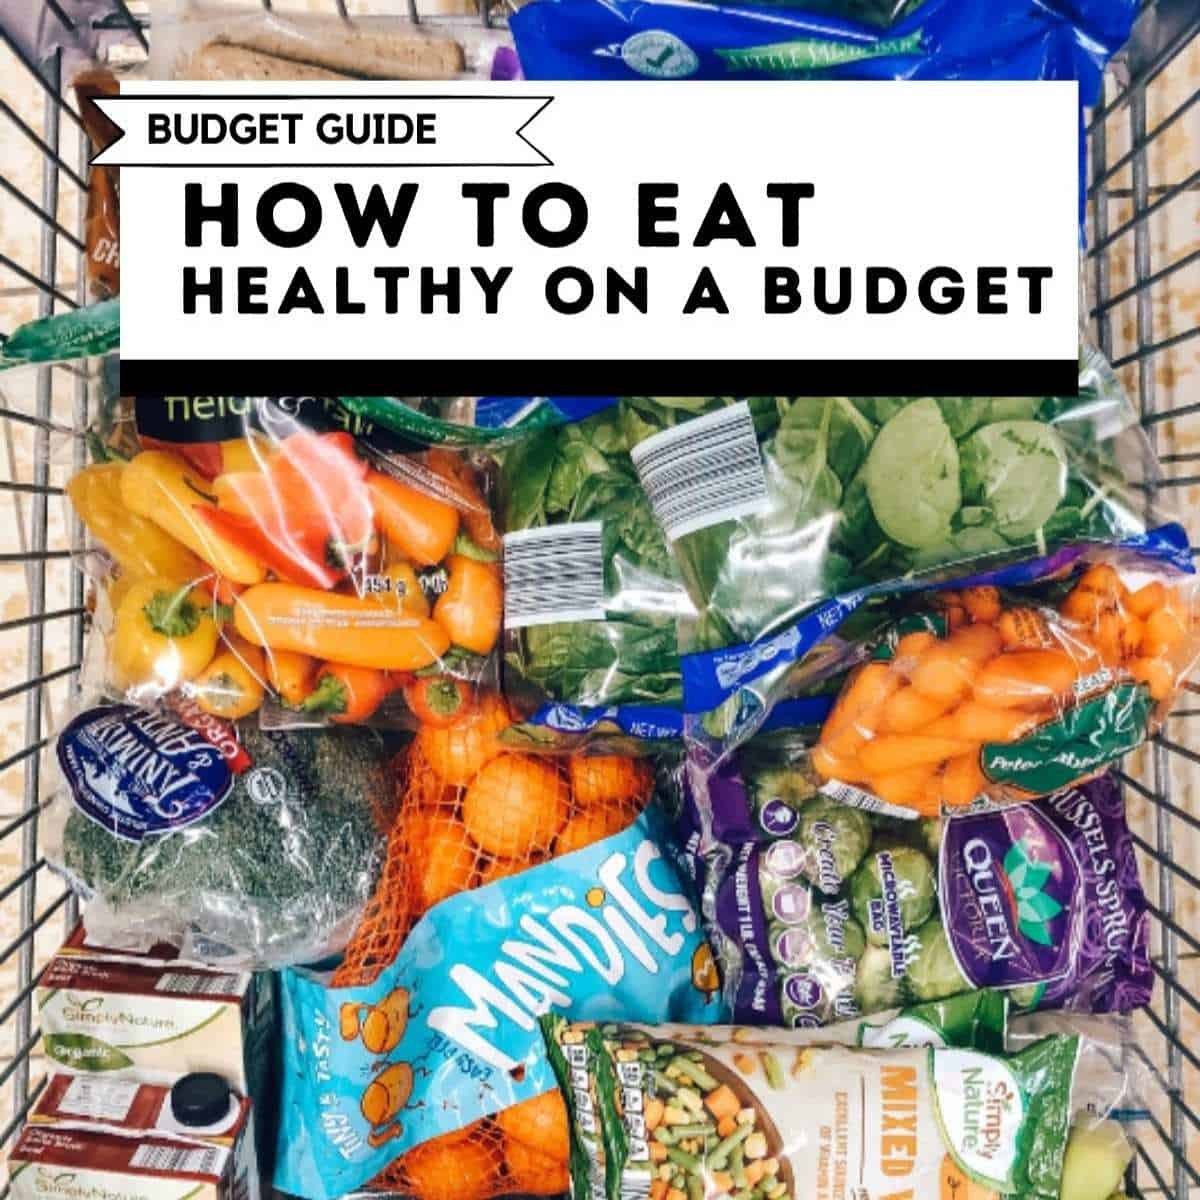 Budget-friendly grocery deals